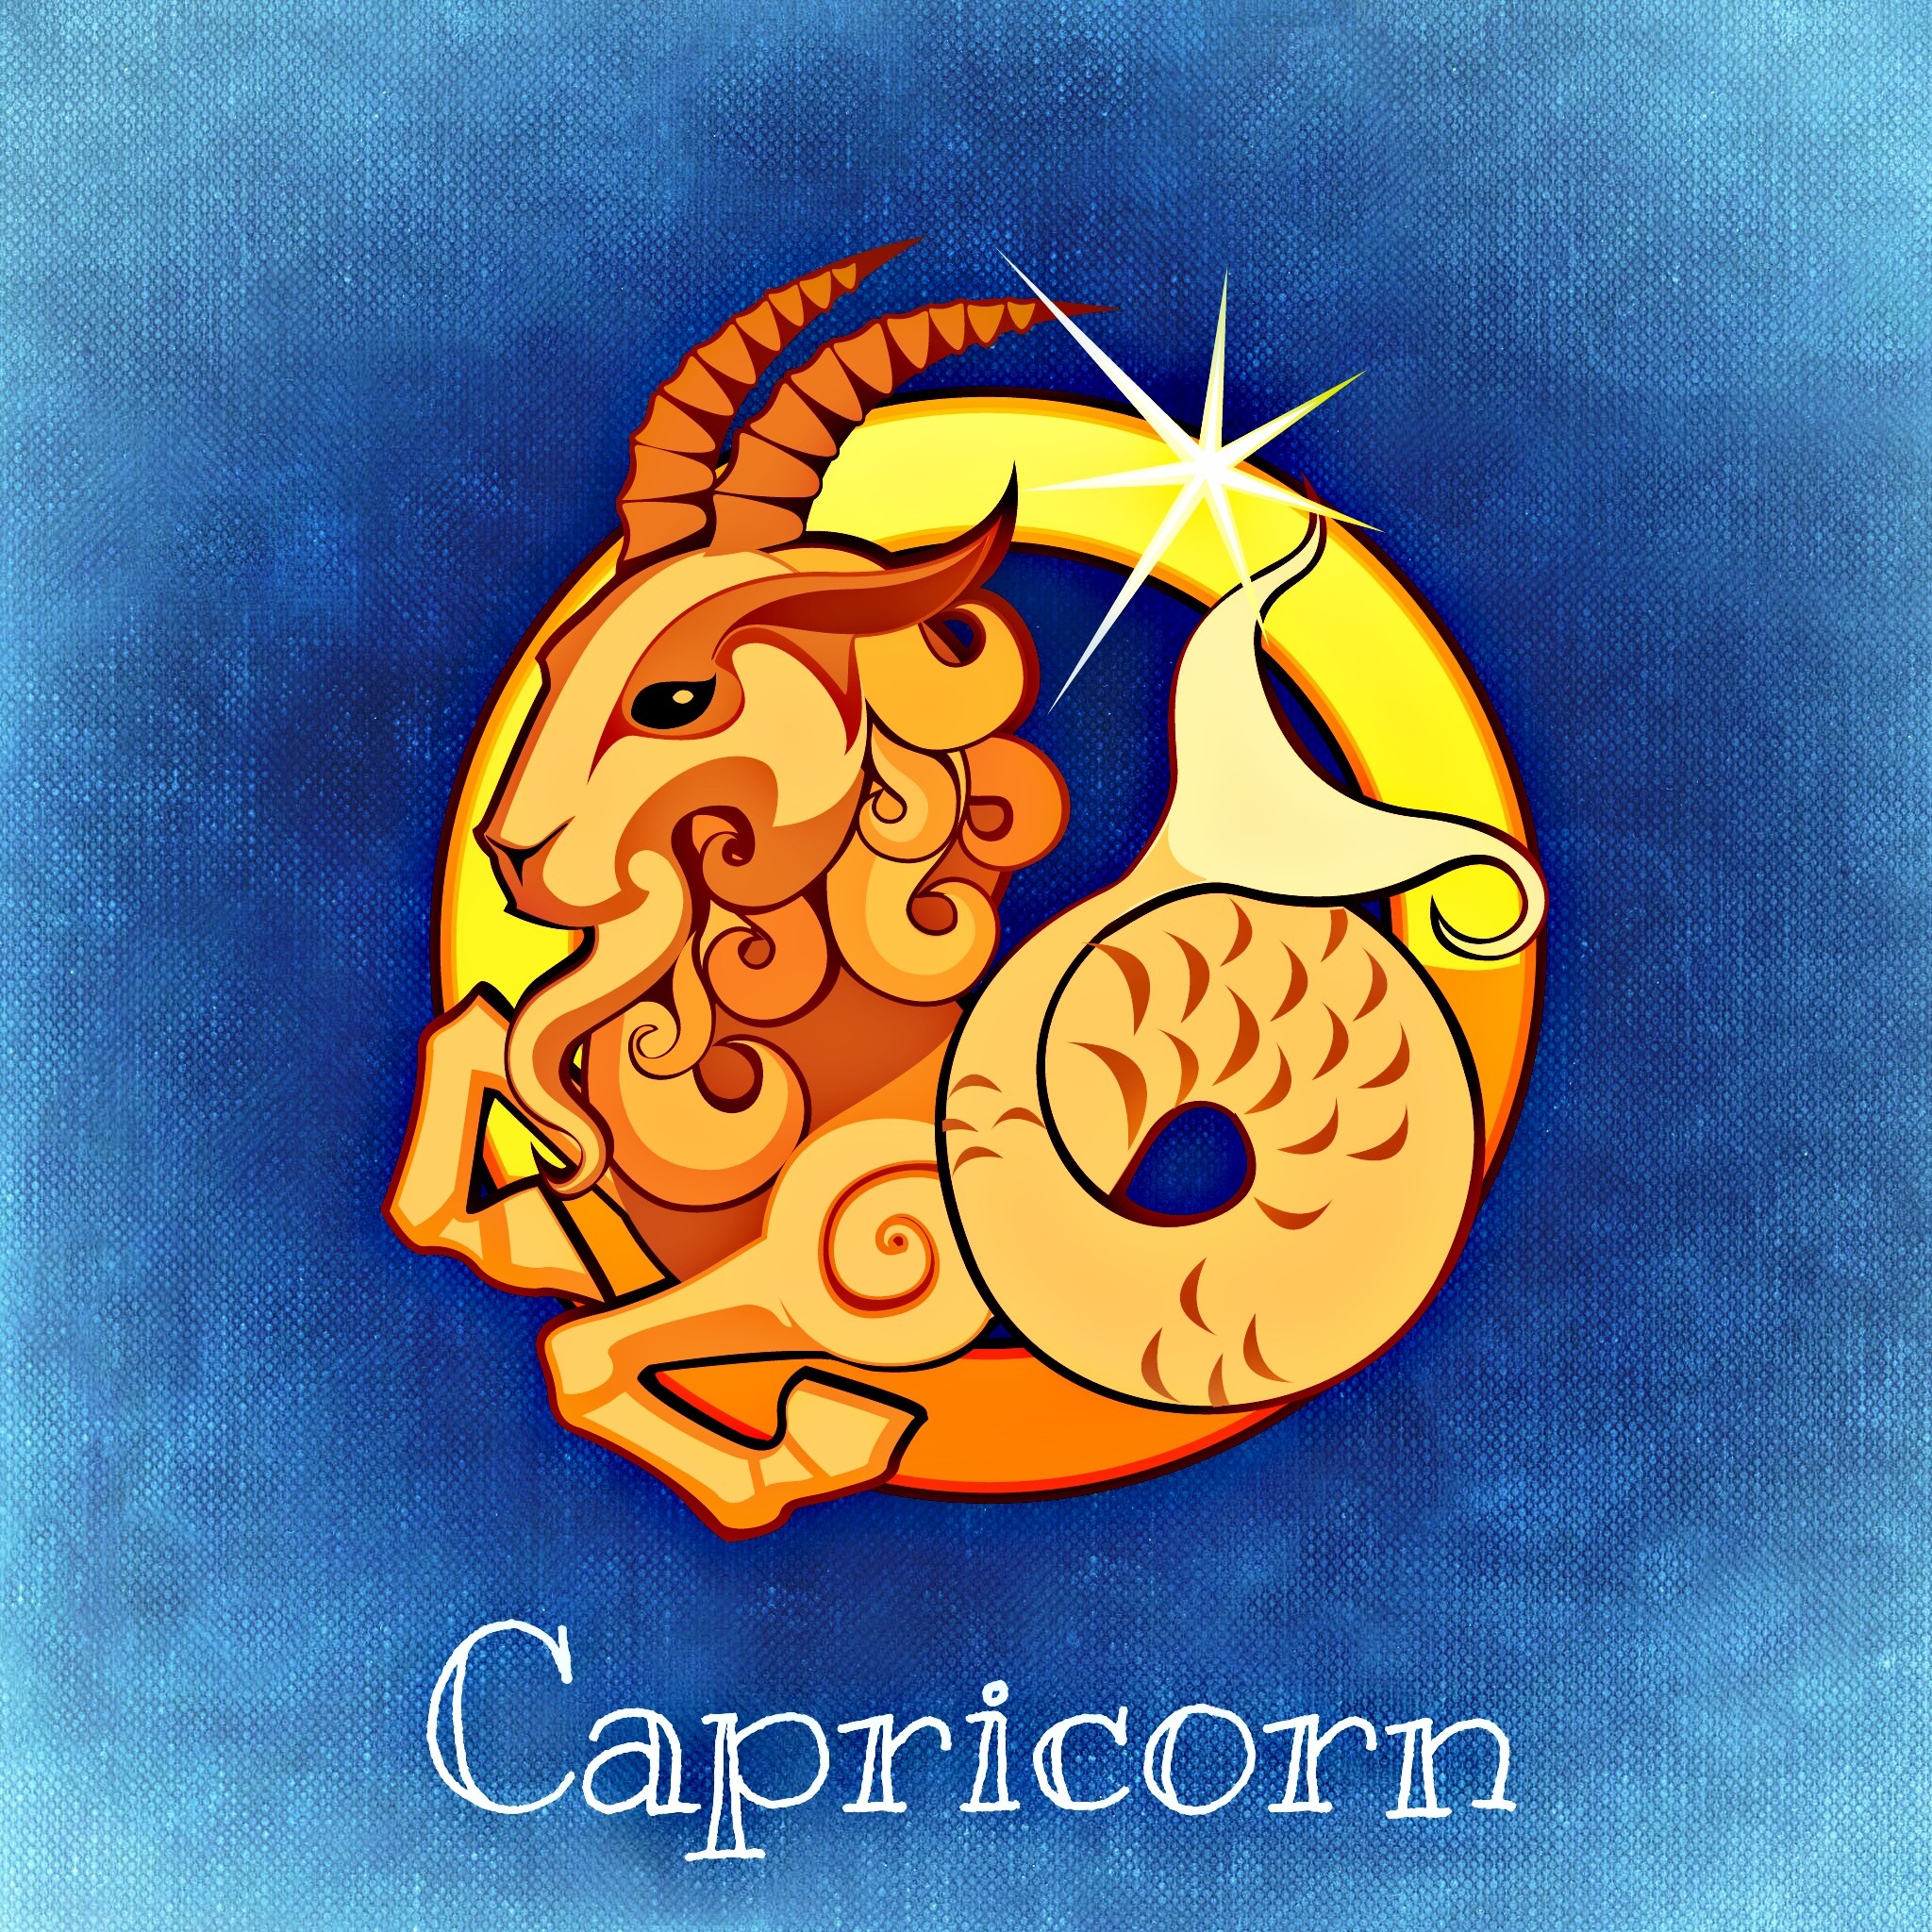 10 Capricorn